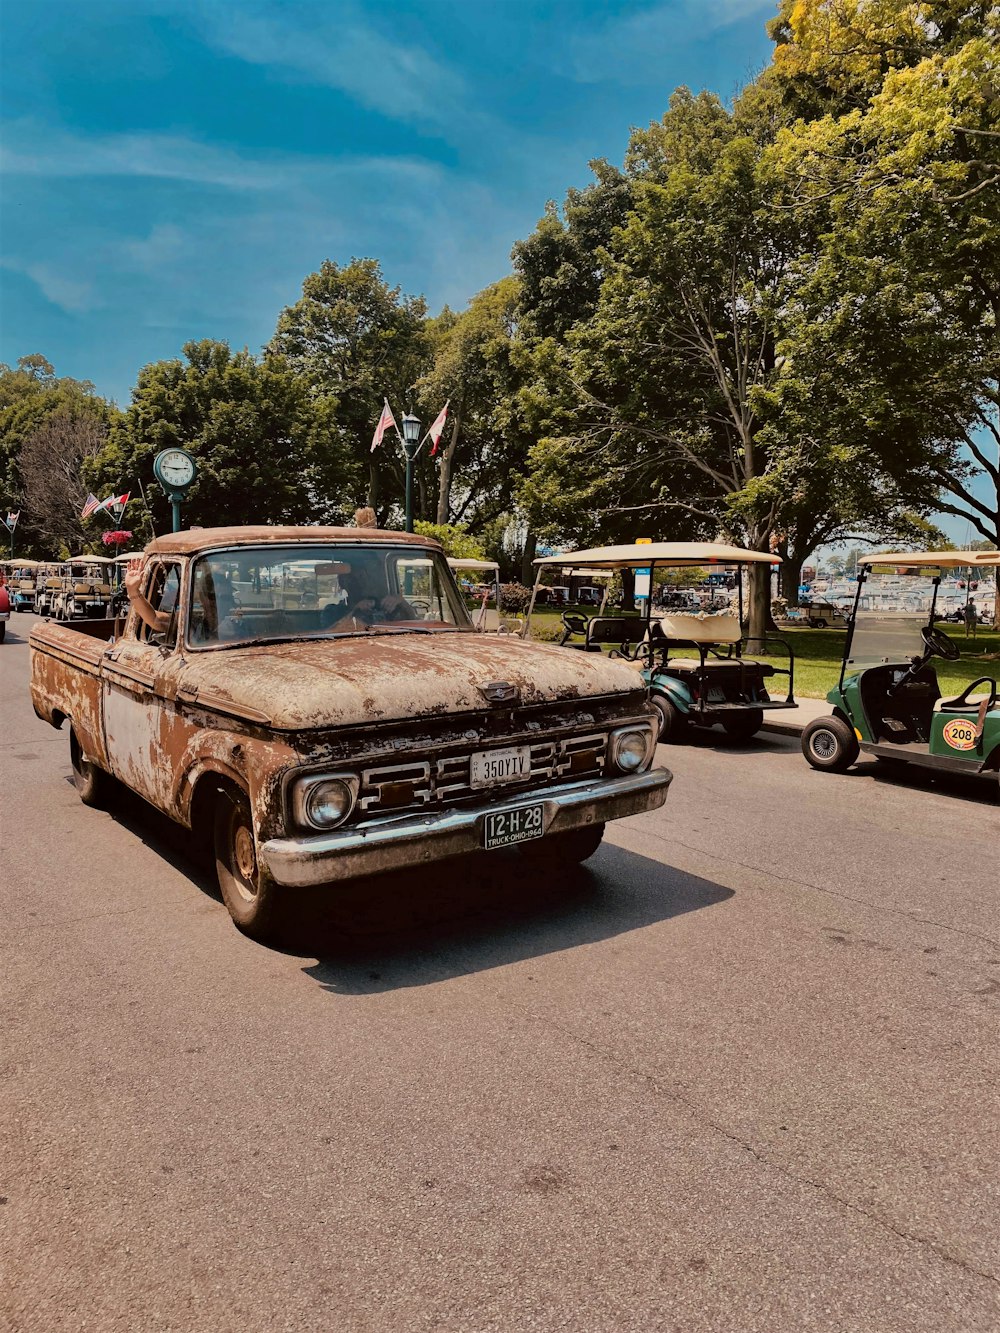 brown and white vintage car parked on gray asphalt road during daytime